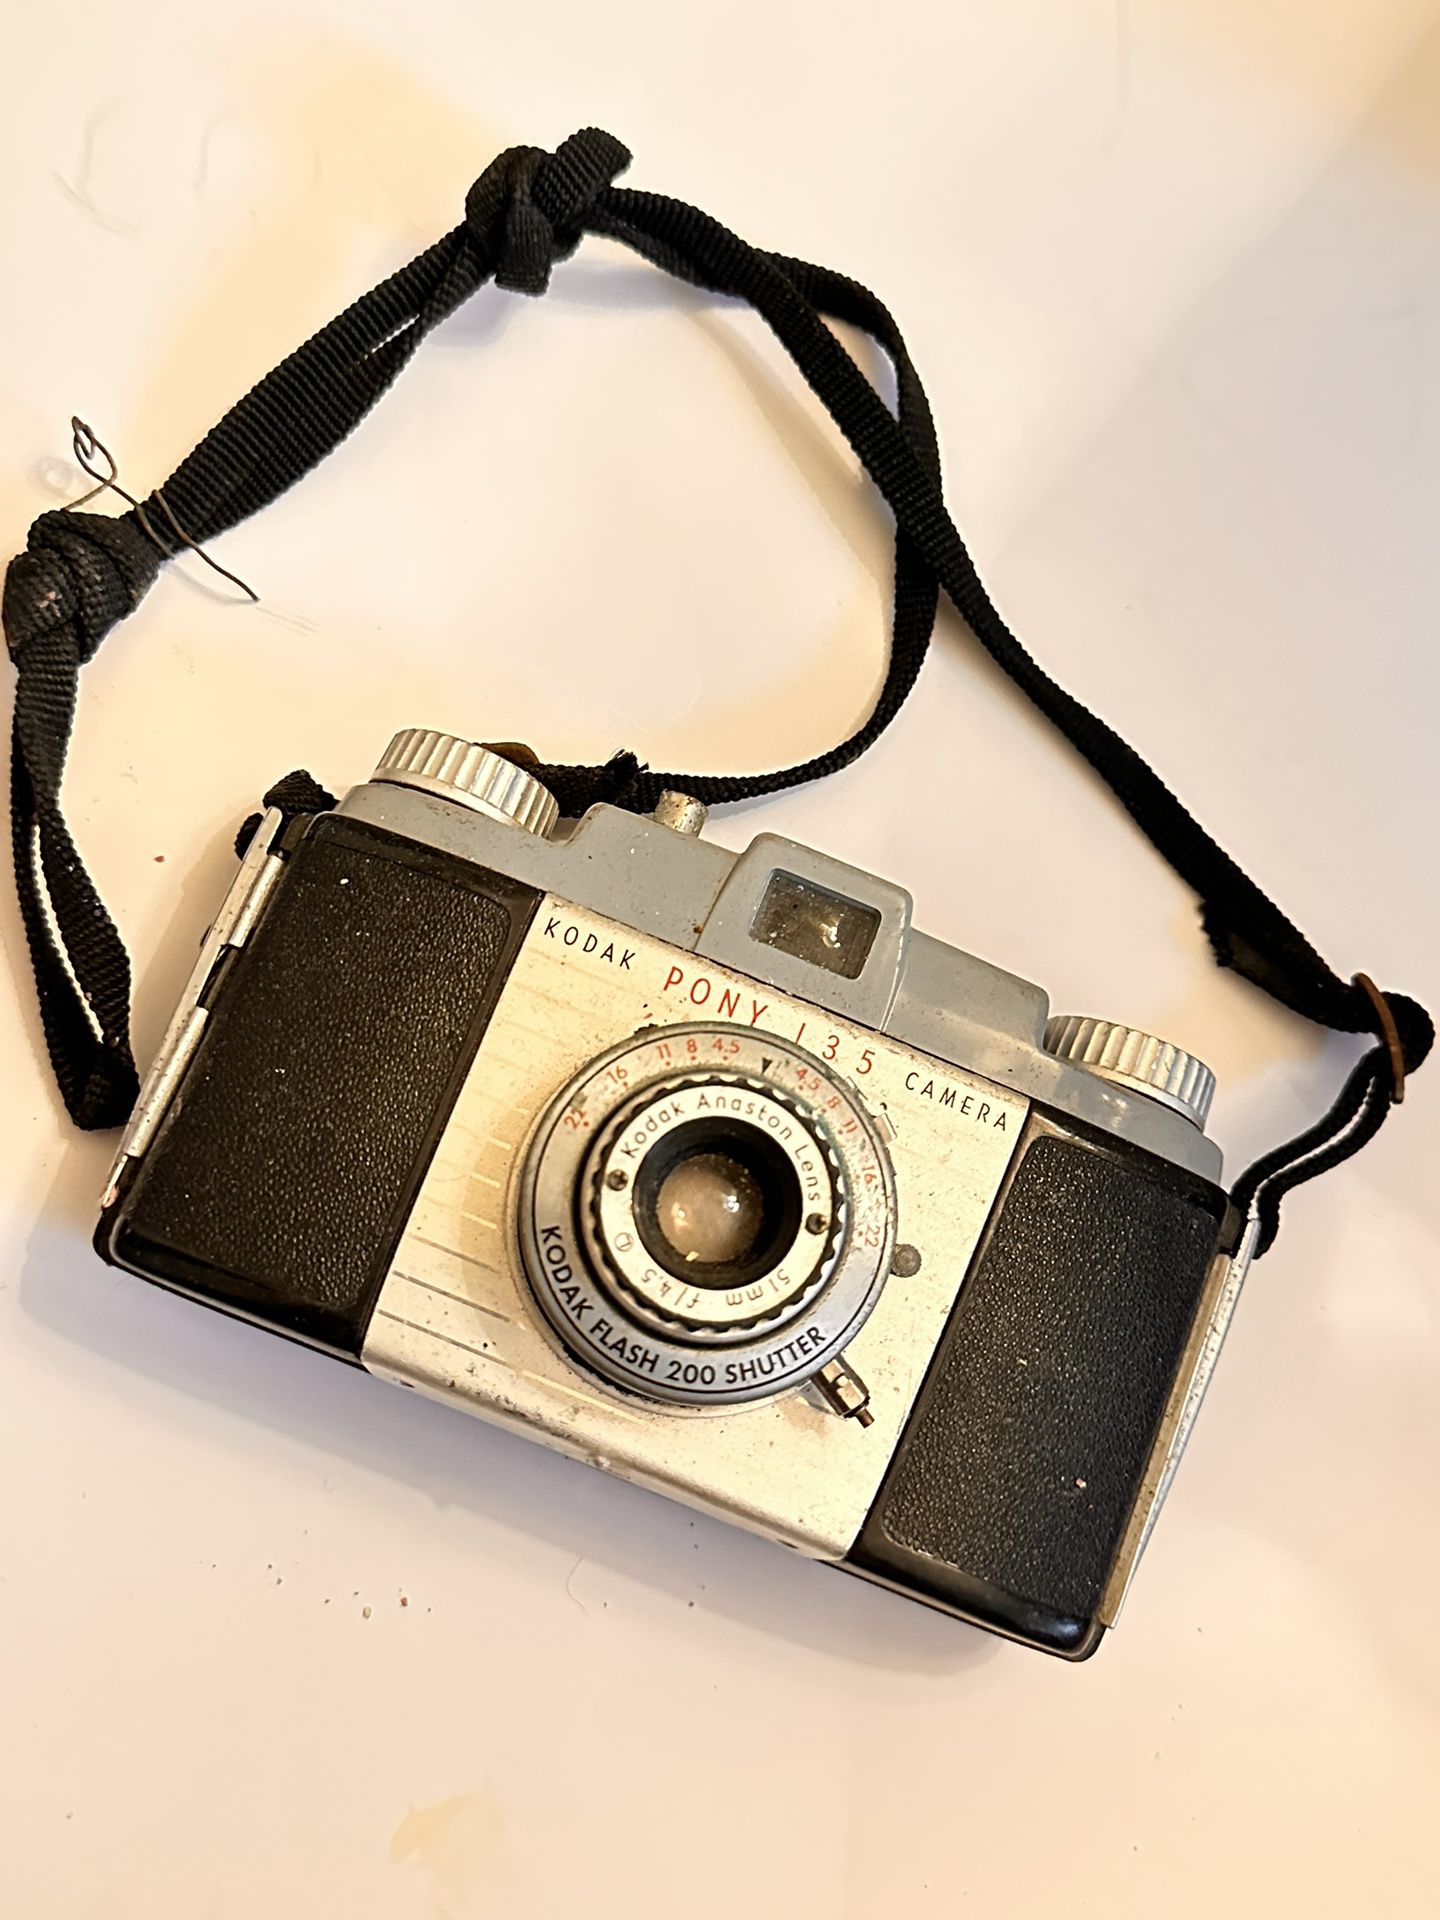 Kodak PONY 135 Camera